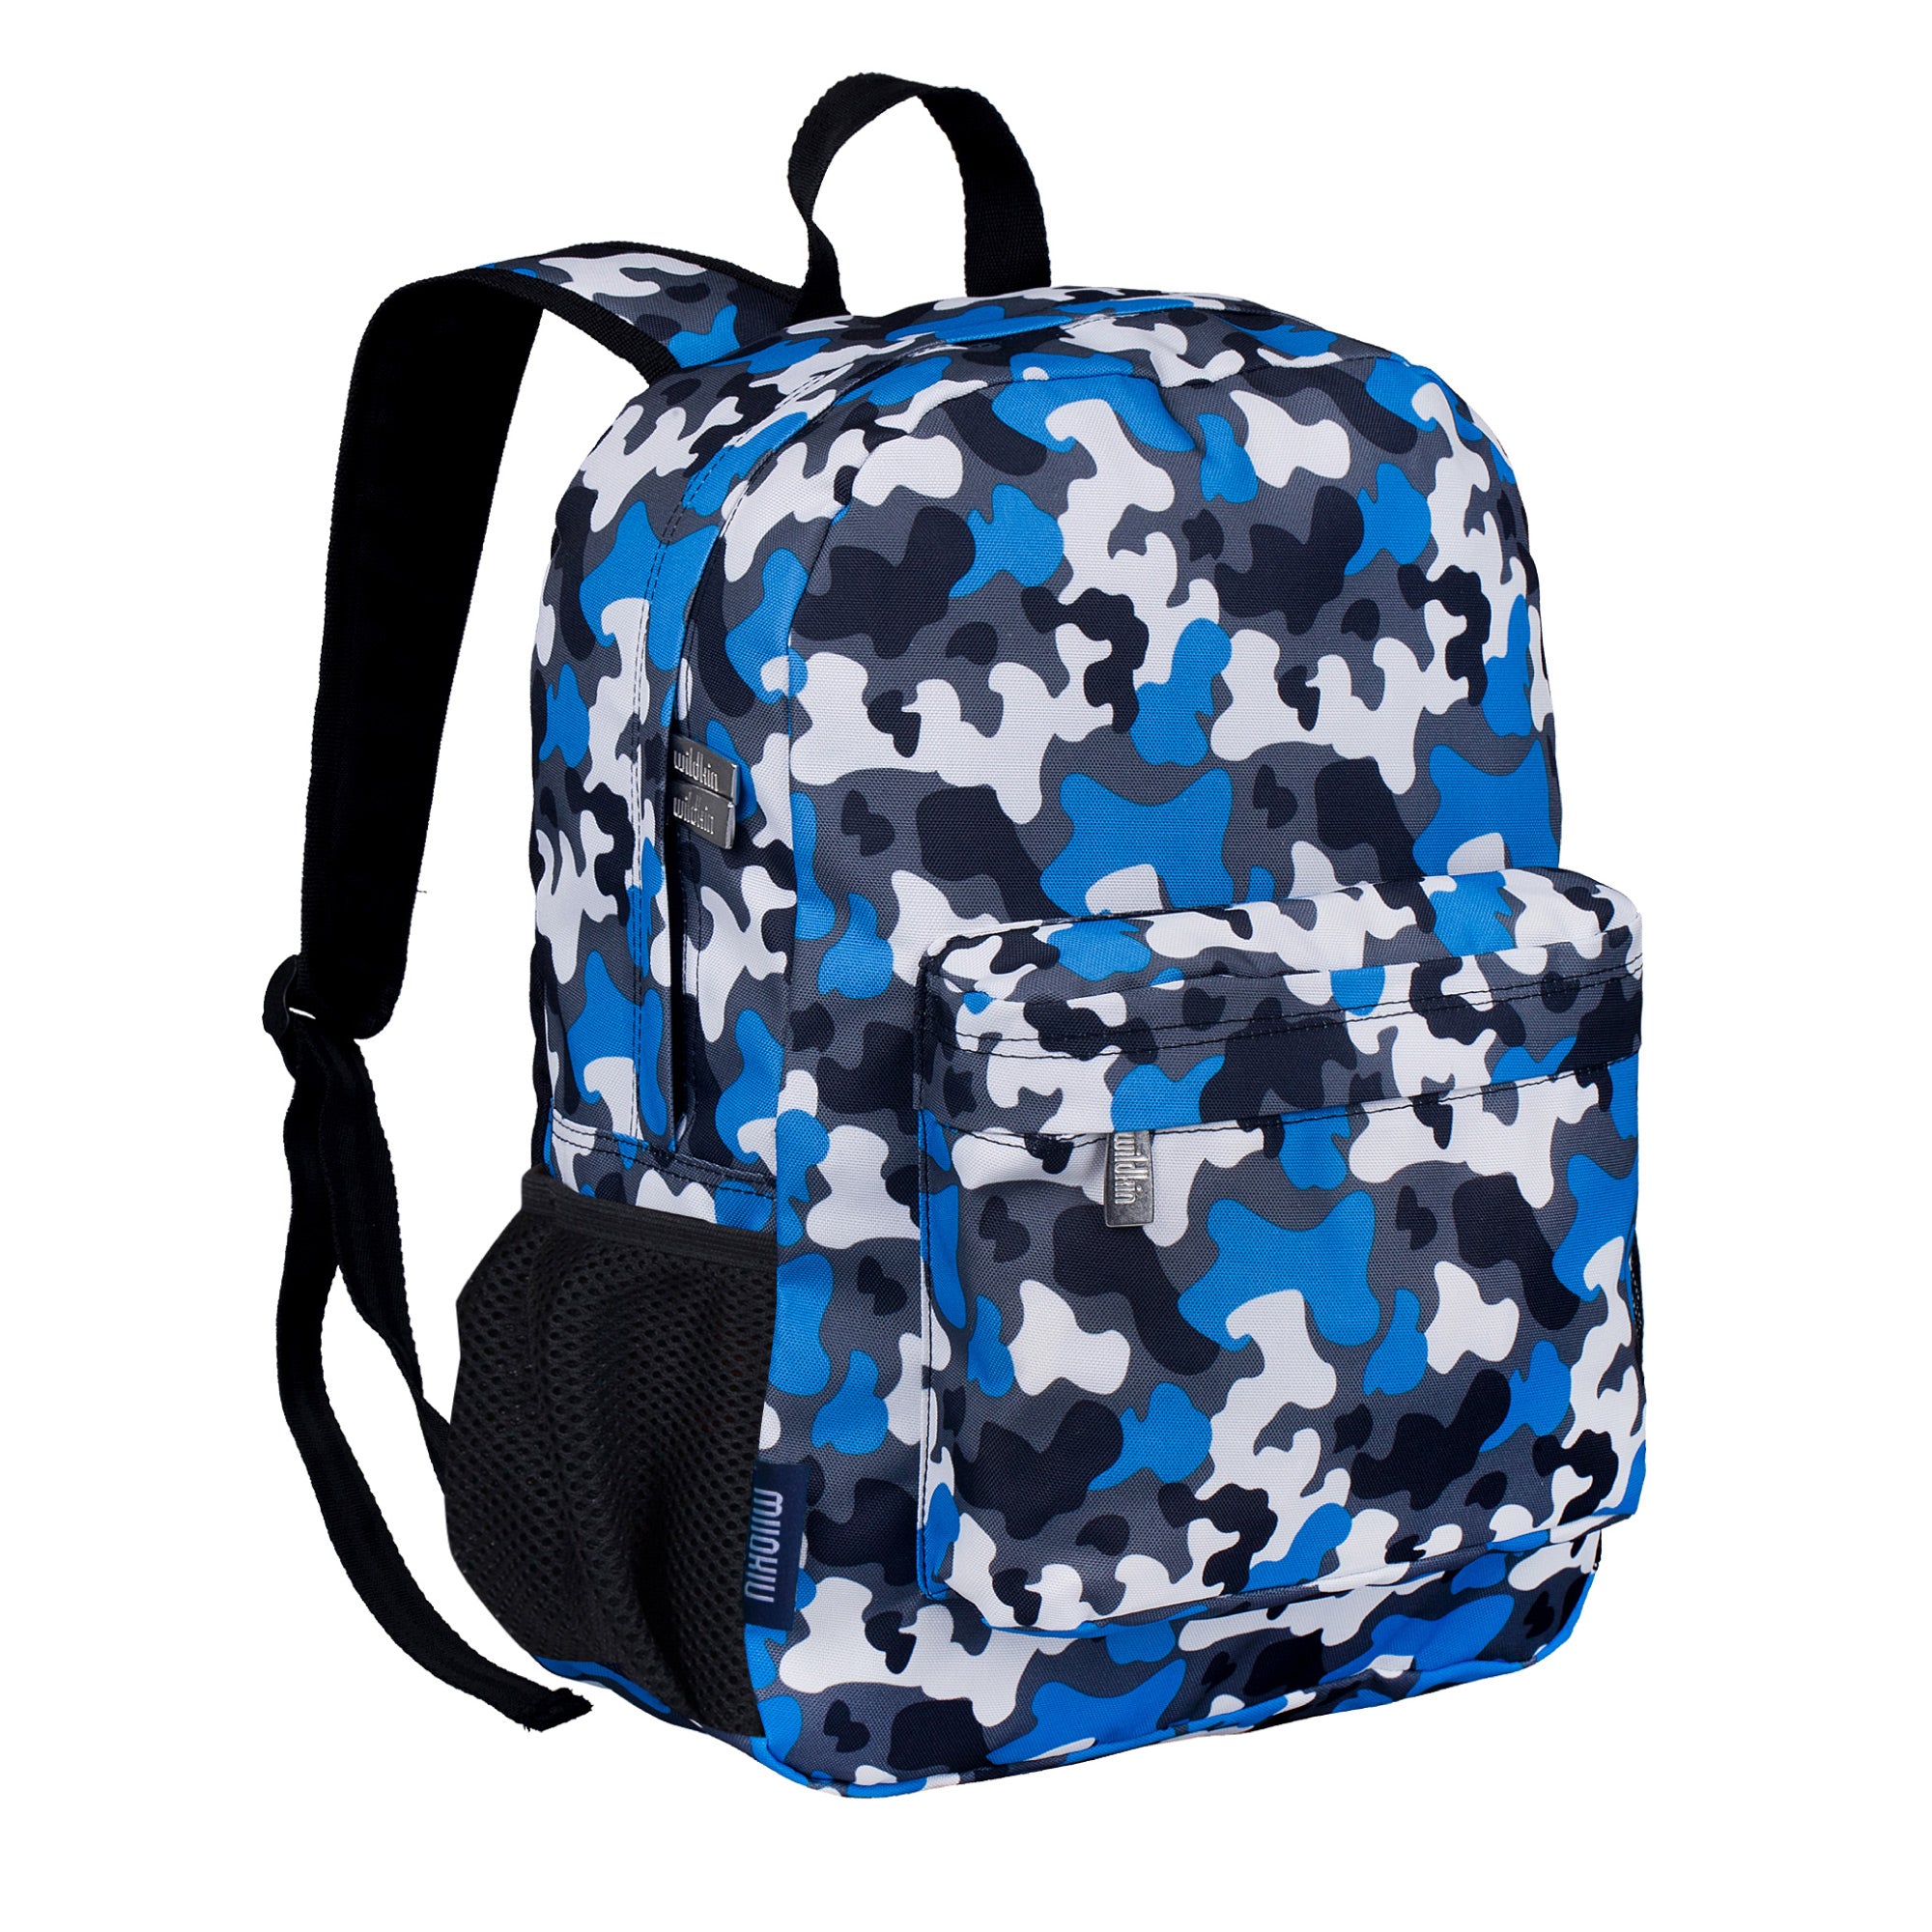 Wildkin Blue Camo Crackerjack Backpack